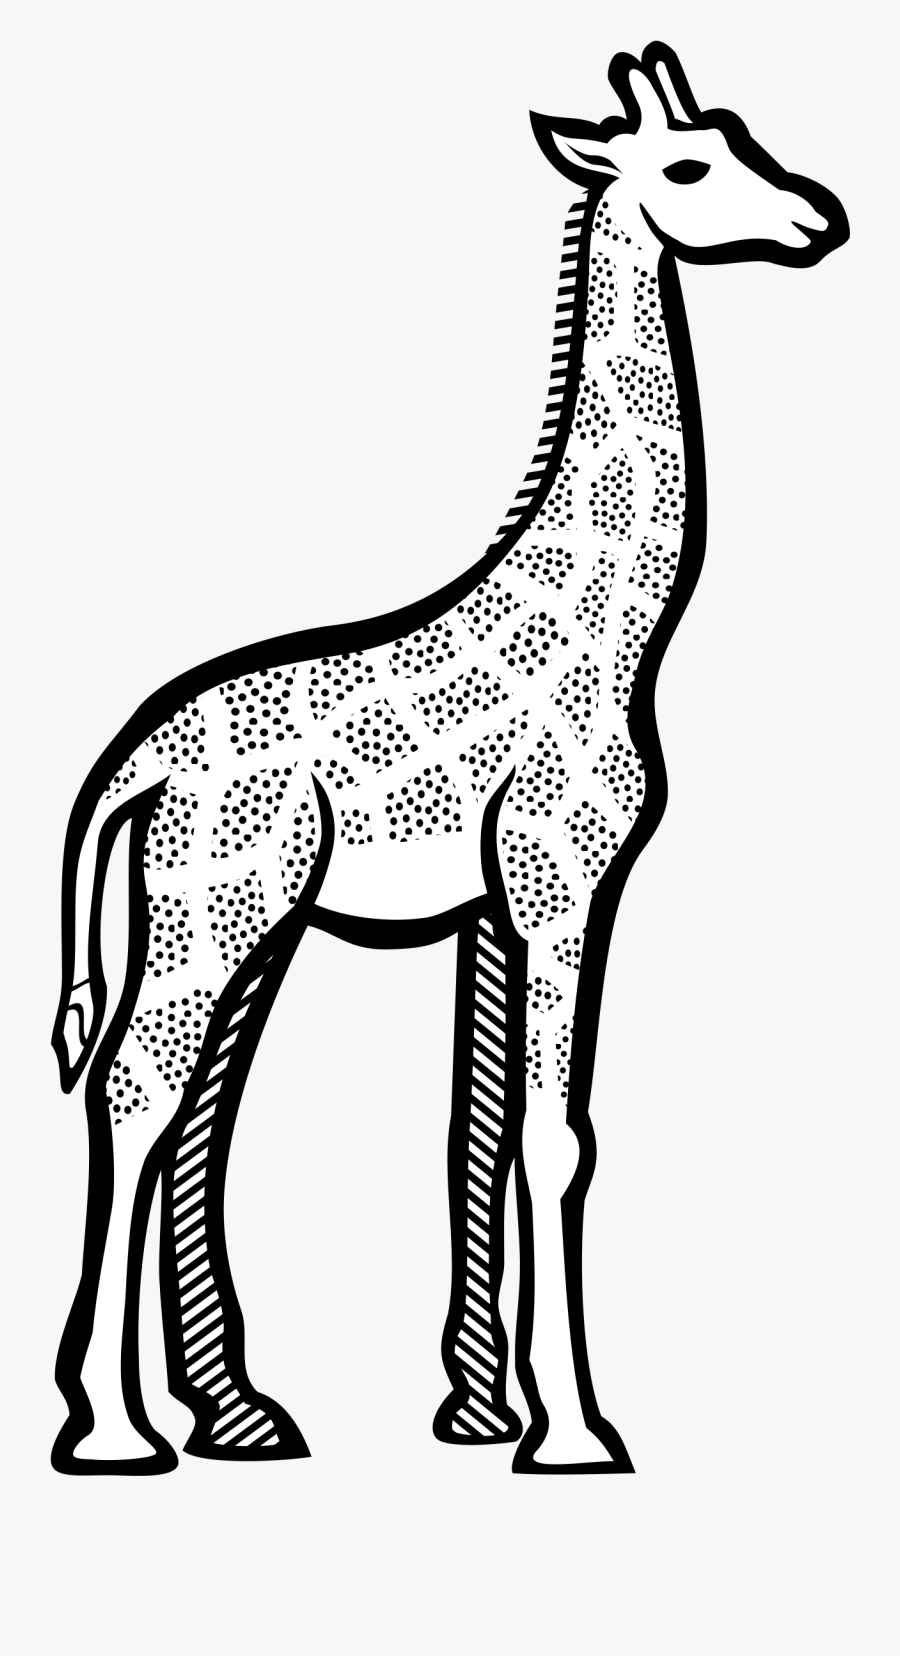 Transparent Giraffe Clip Art - Black And White Giraffe Clip Art, Transparent Clipart